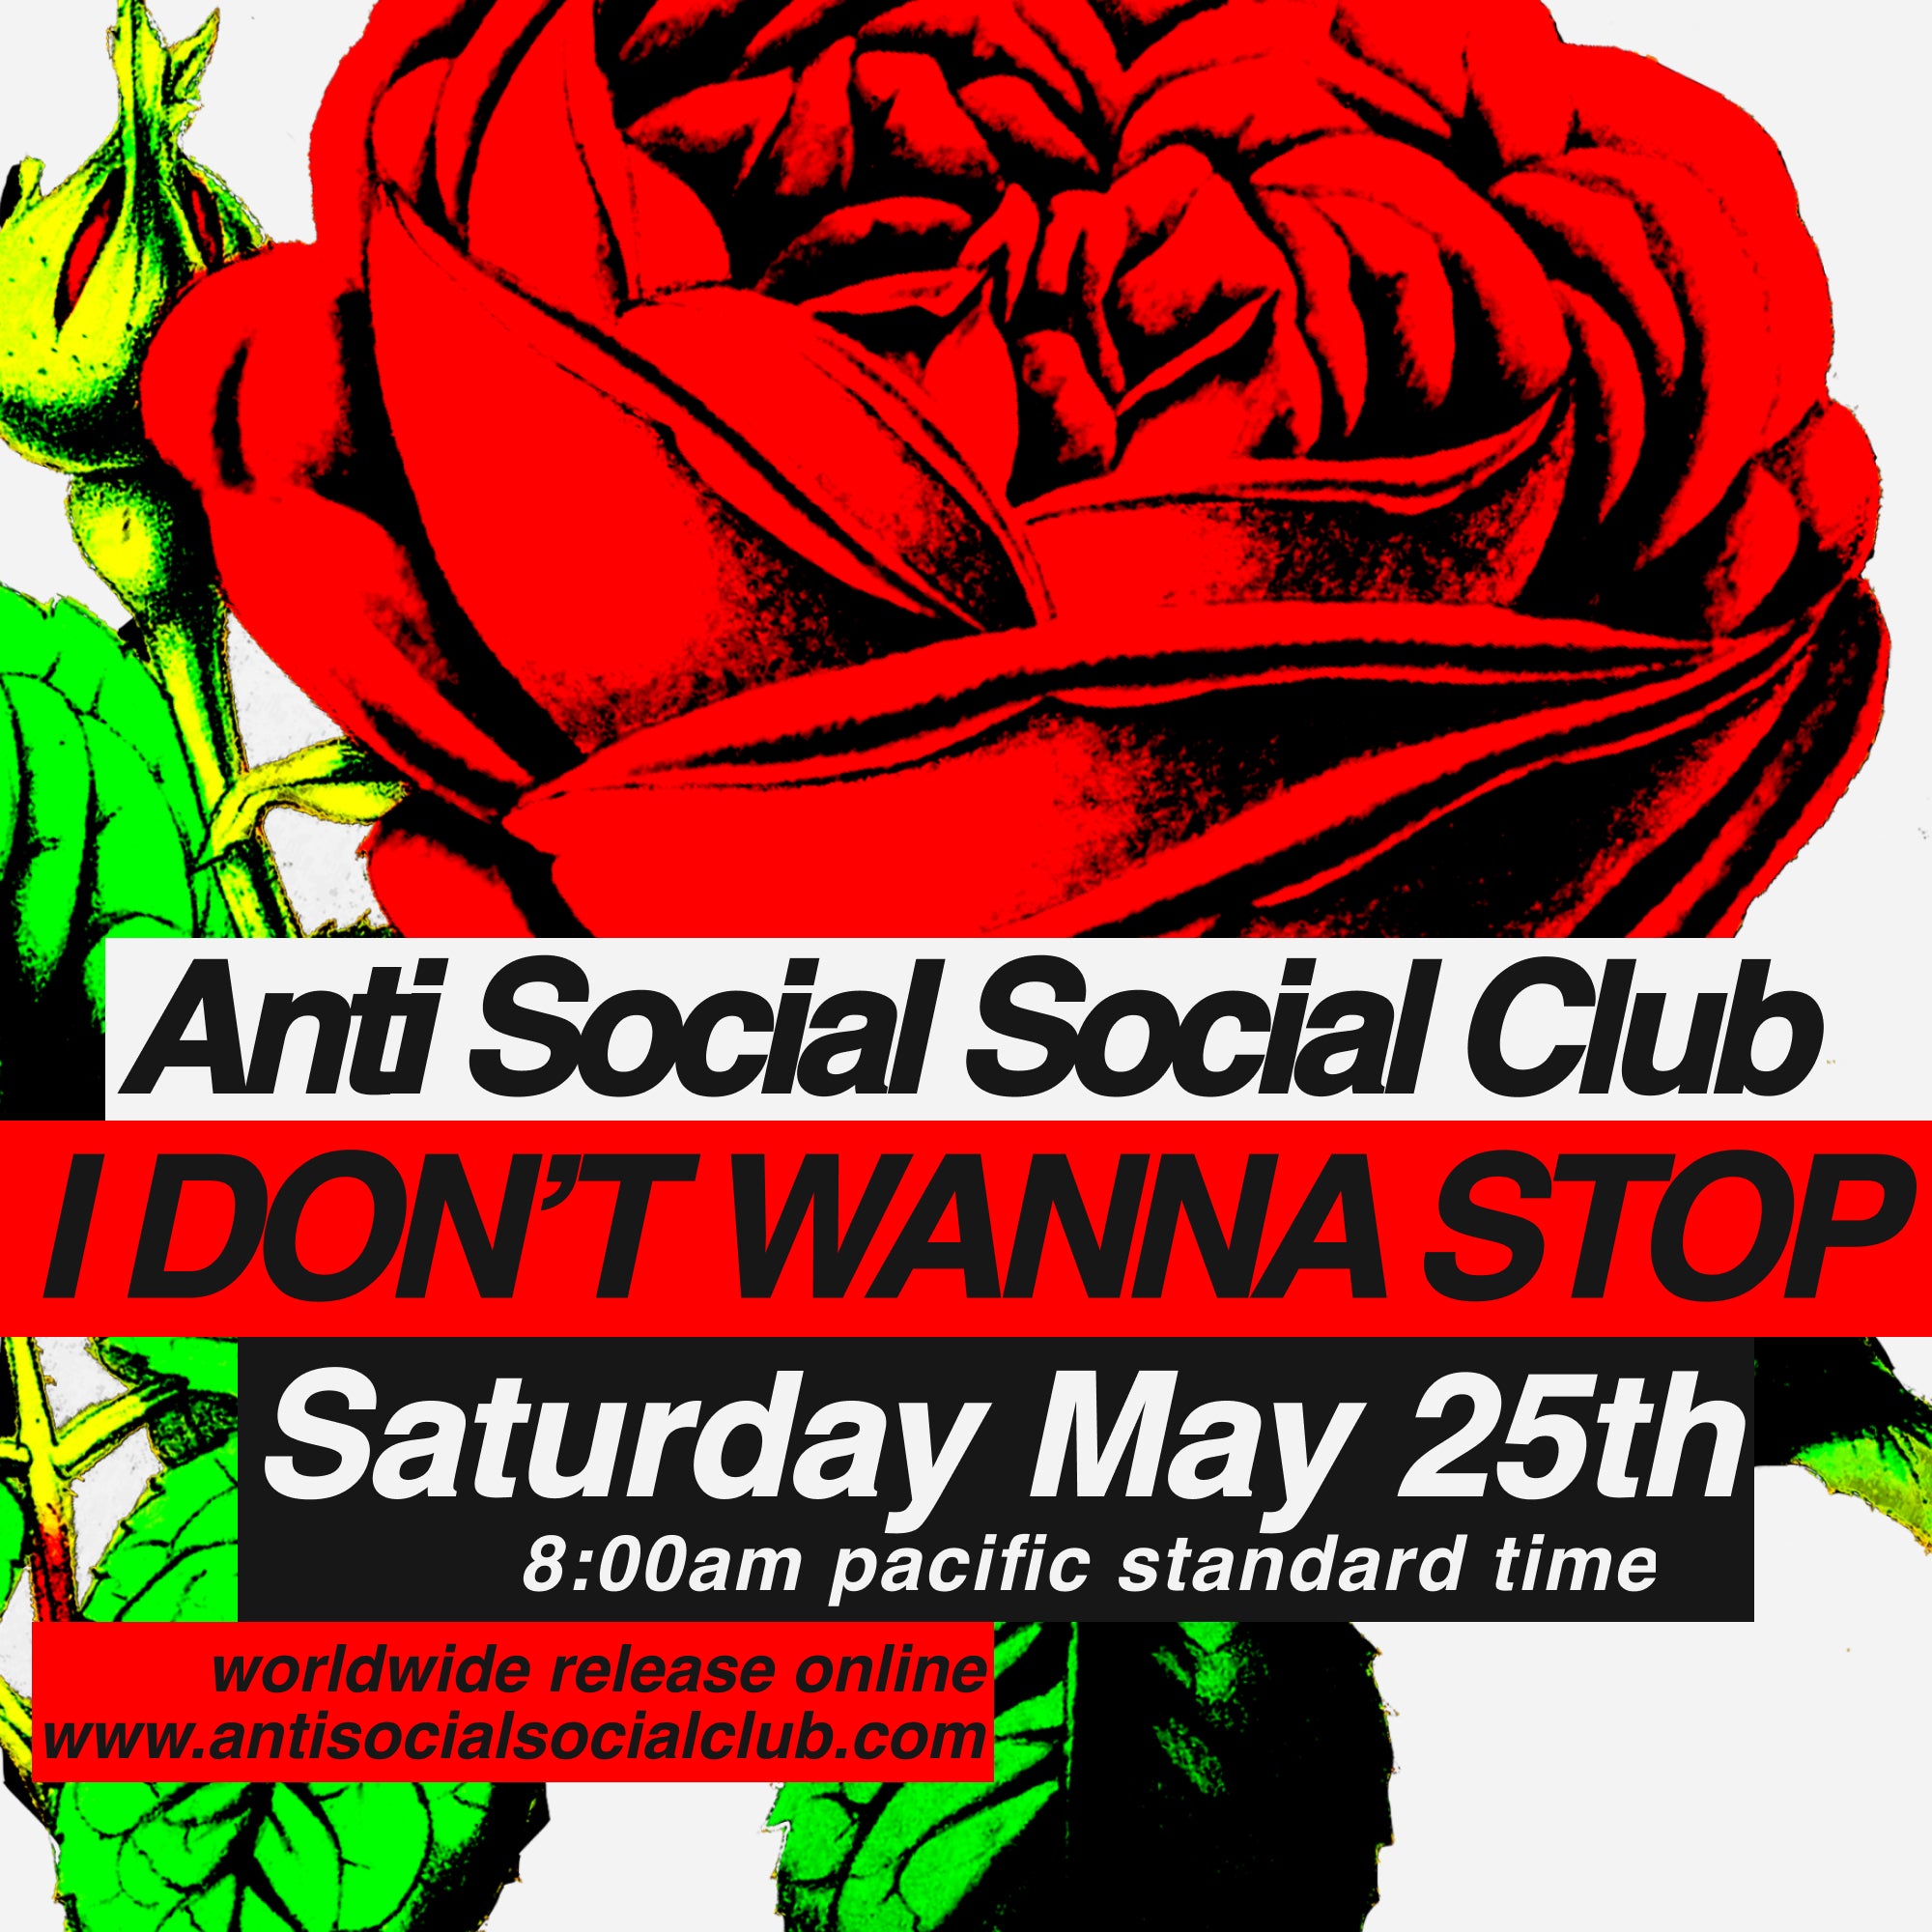 AntiSocialSocialClub